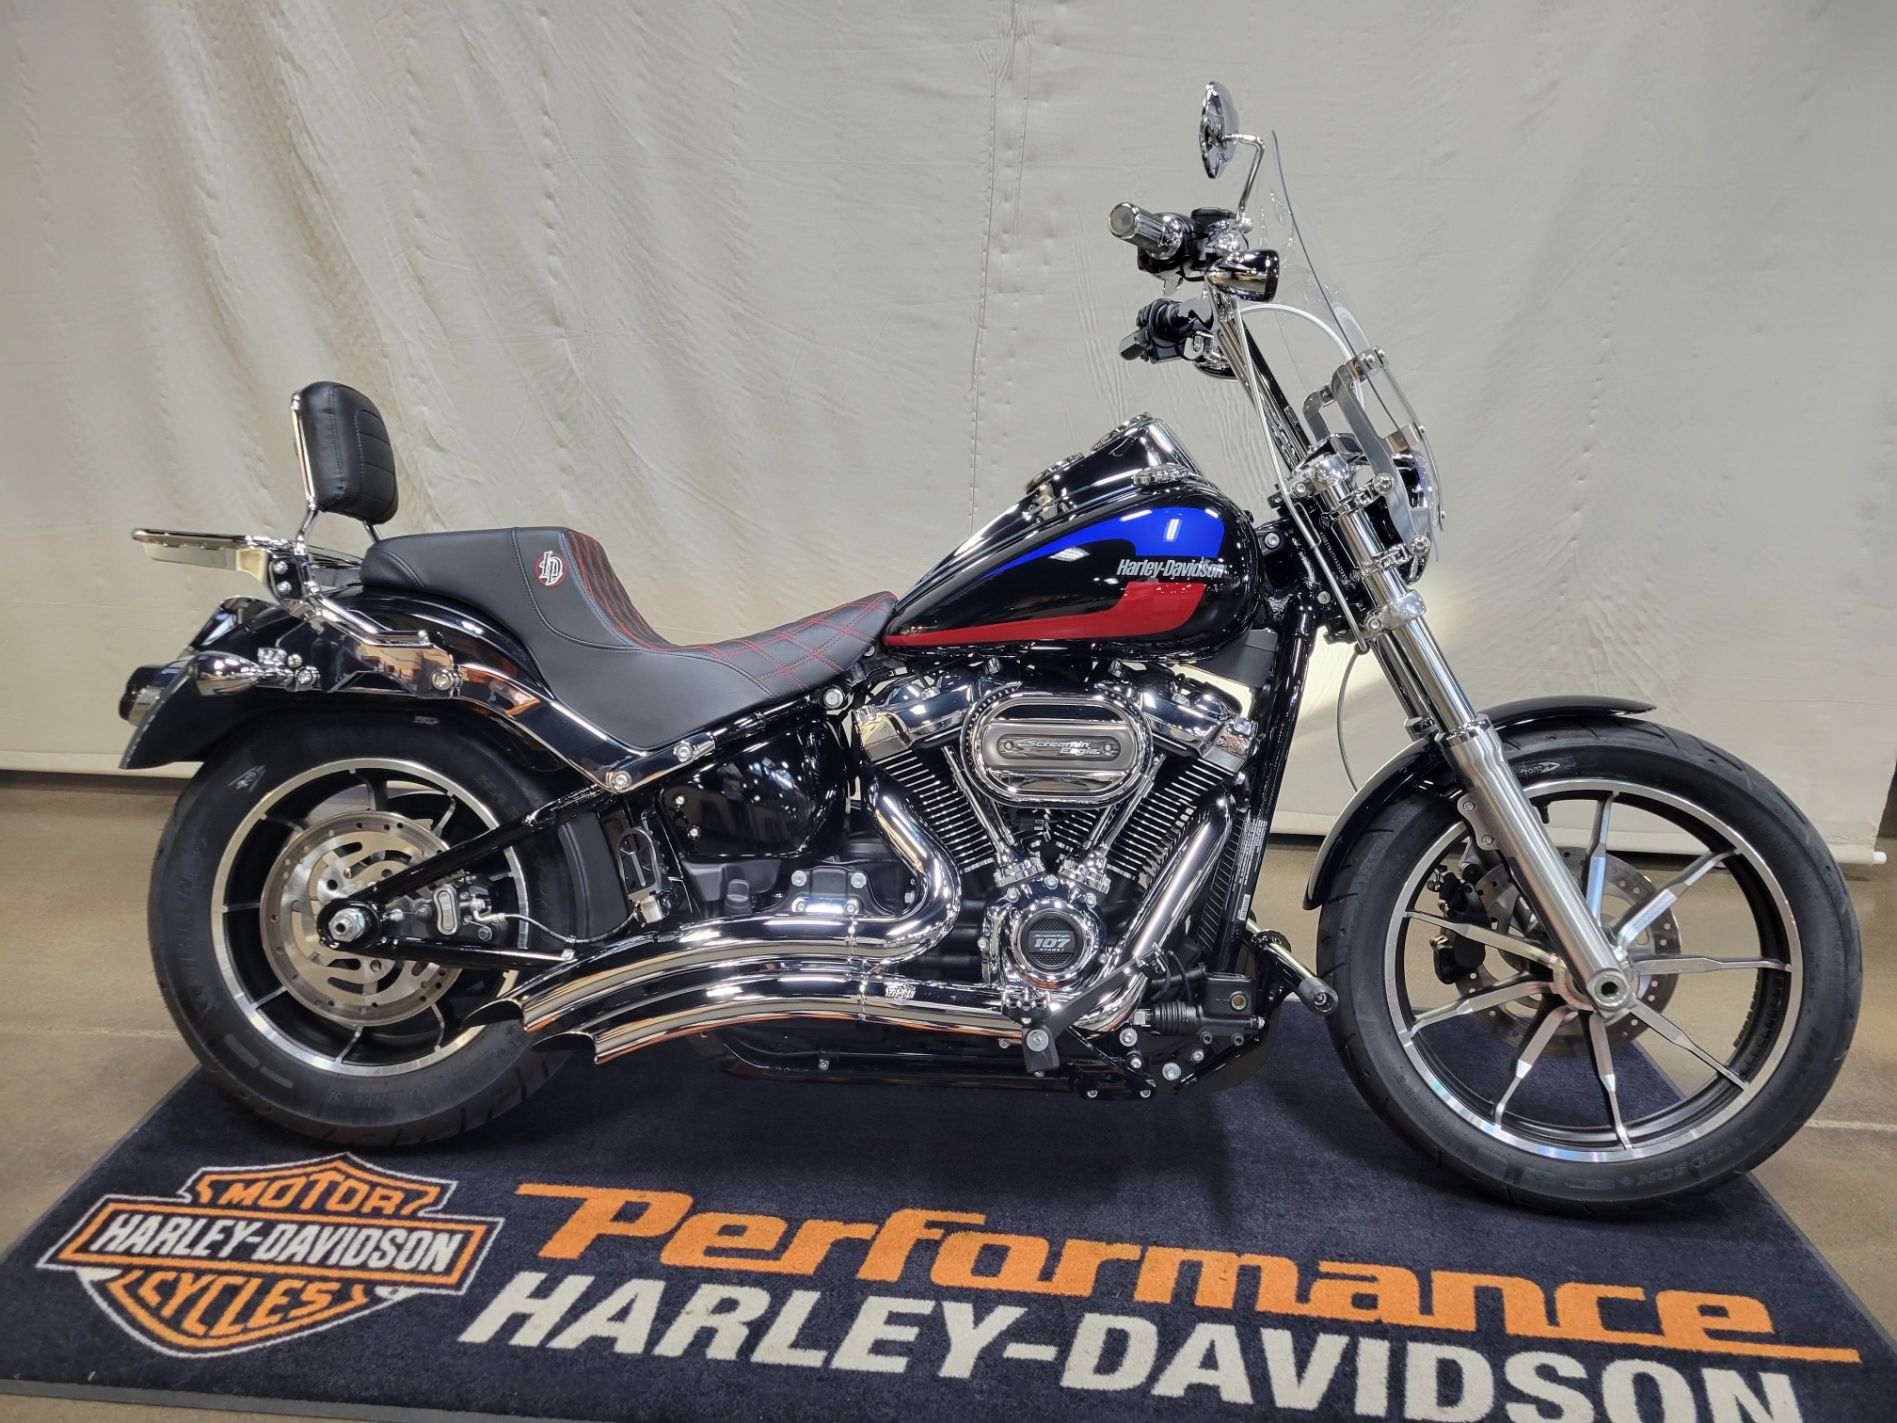 2019 Harley-Davidson Low Rider® in Syracuse, New York - Photo 1